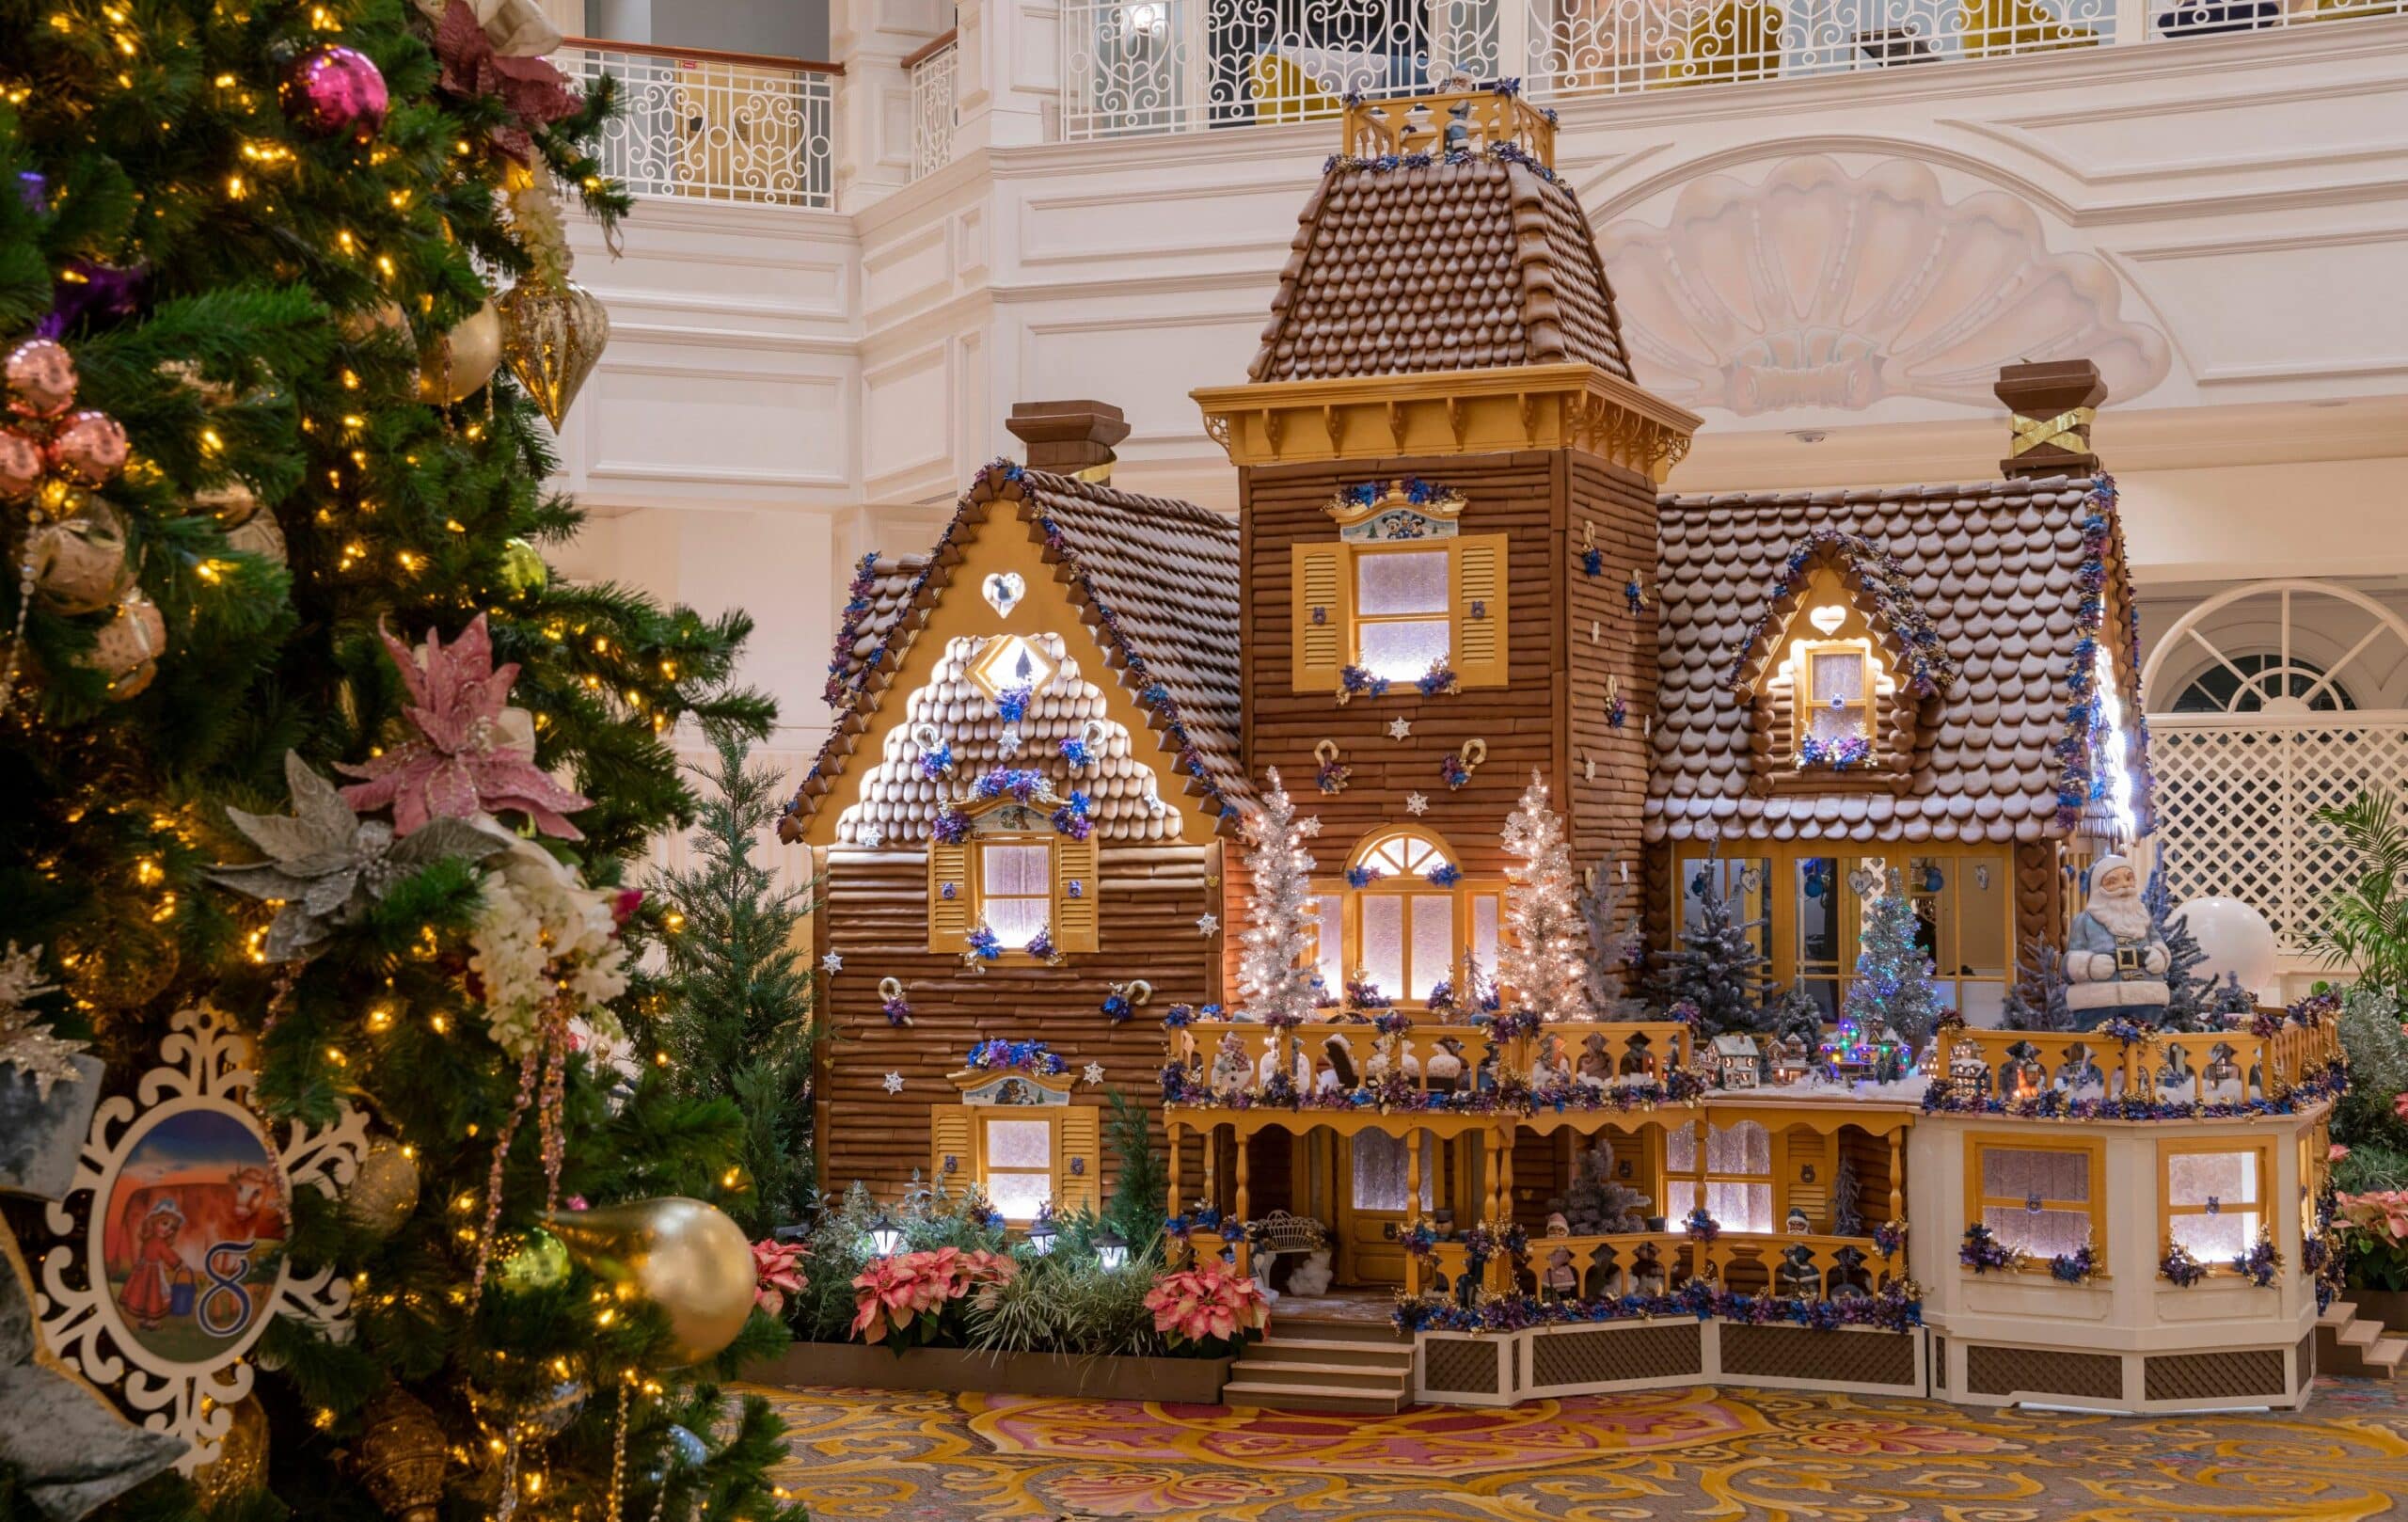 Gingerbread Display at Disney's Grand Floridian